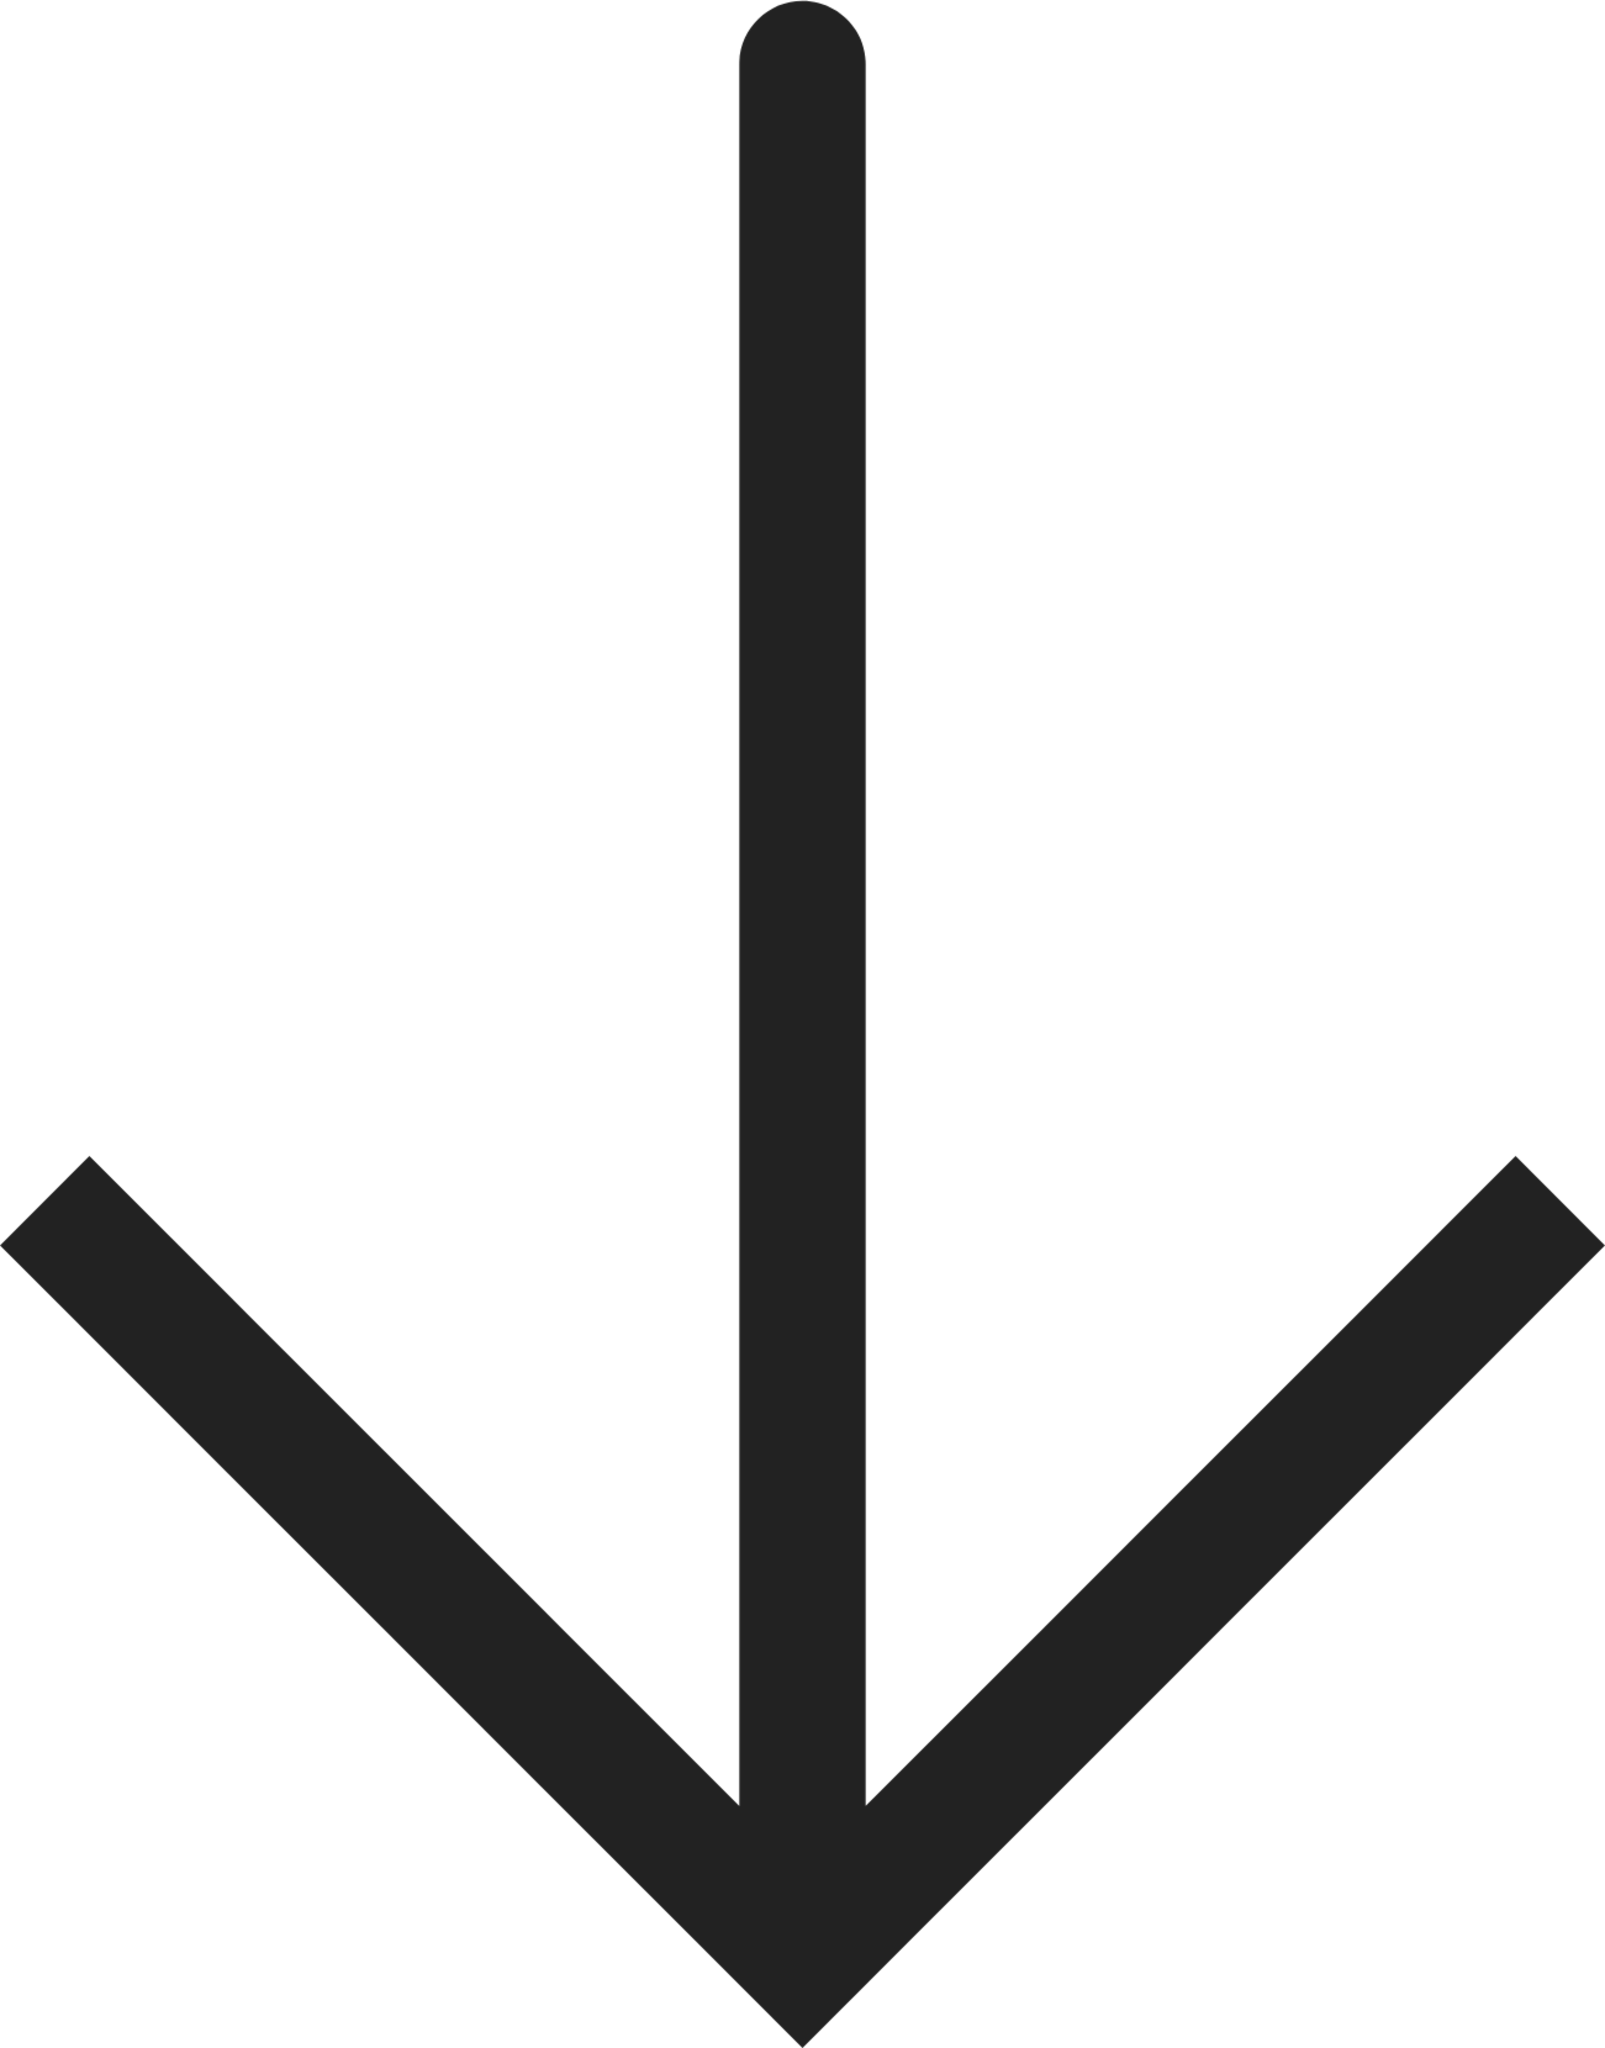 Arrow down light icon